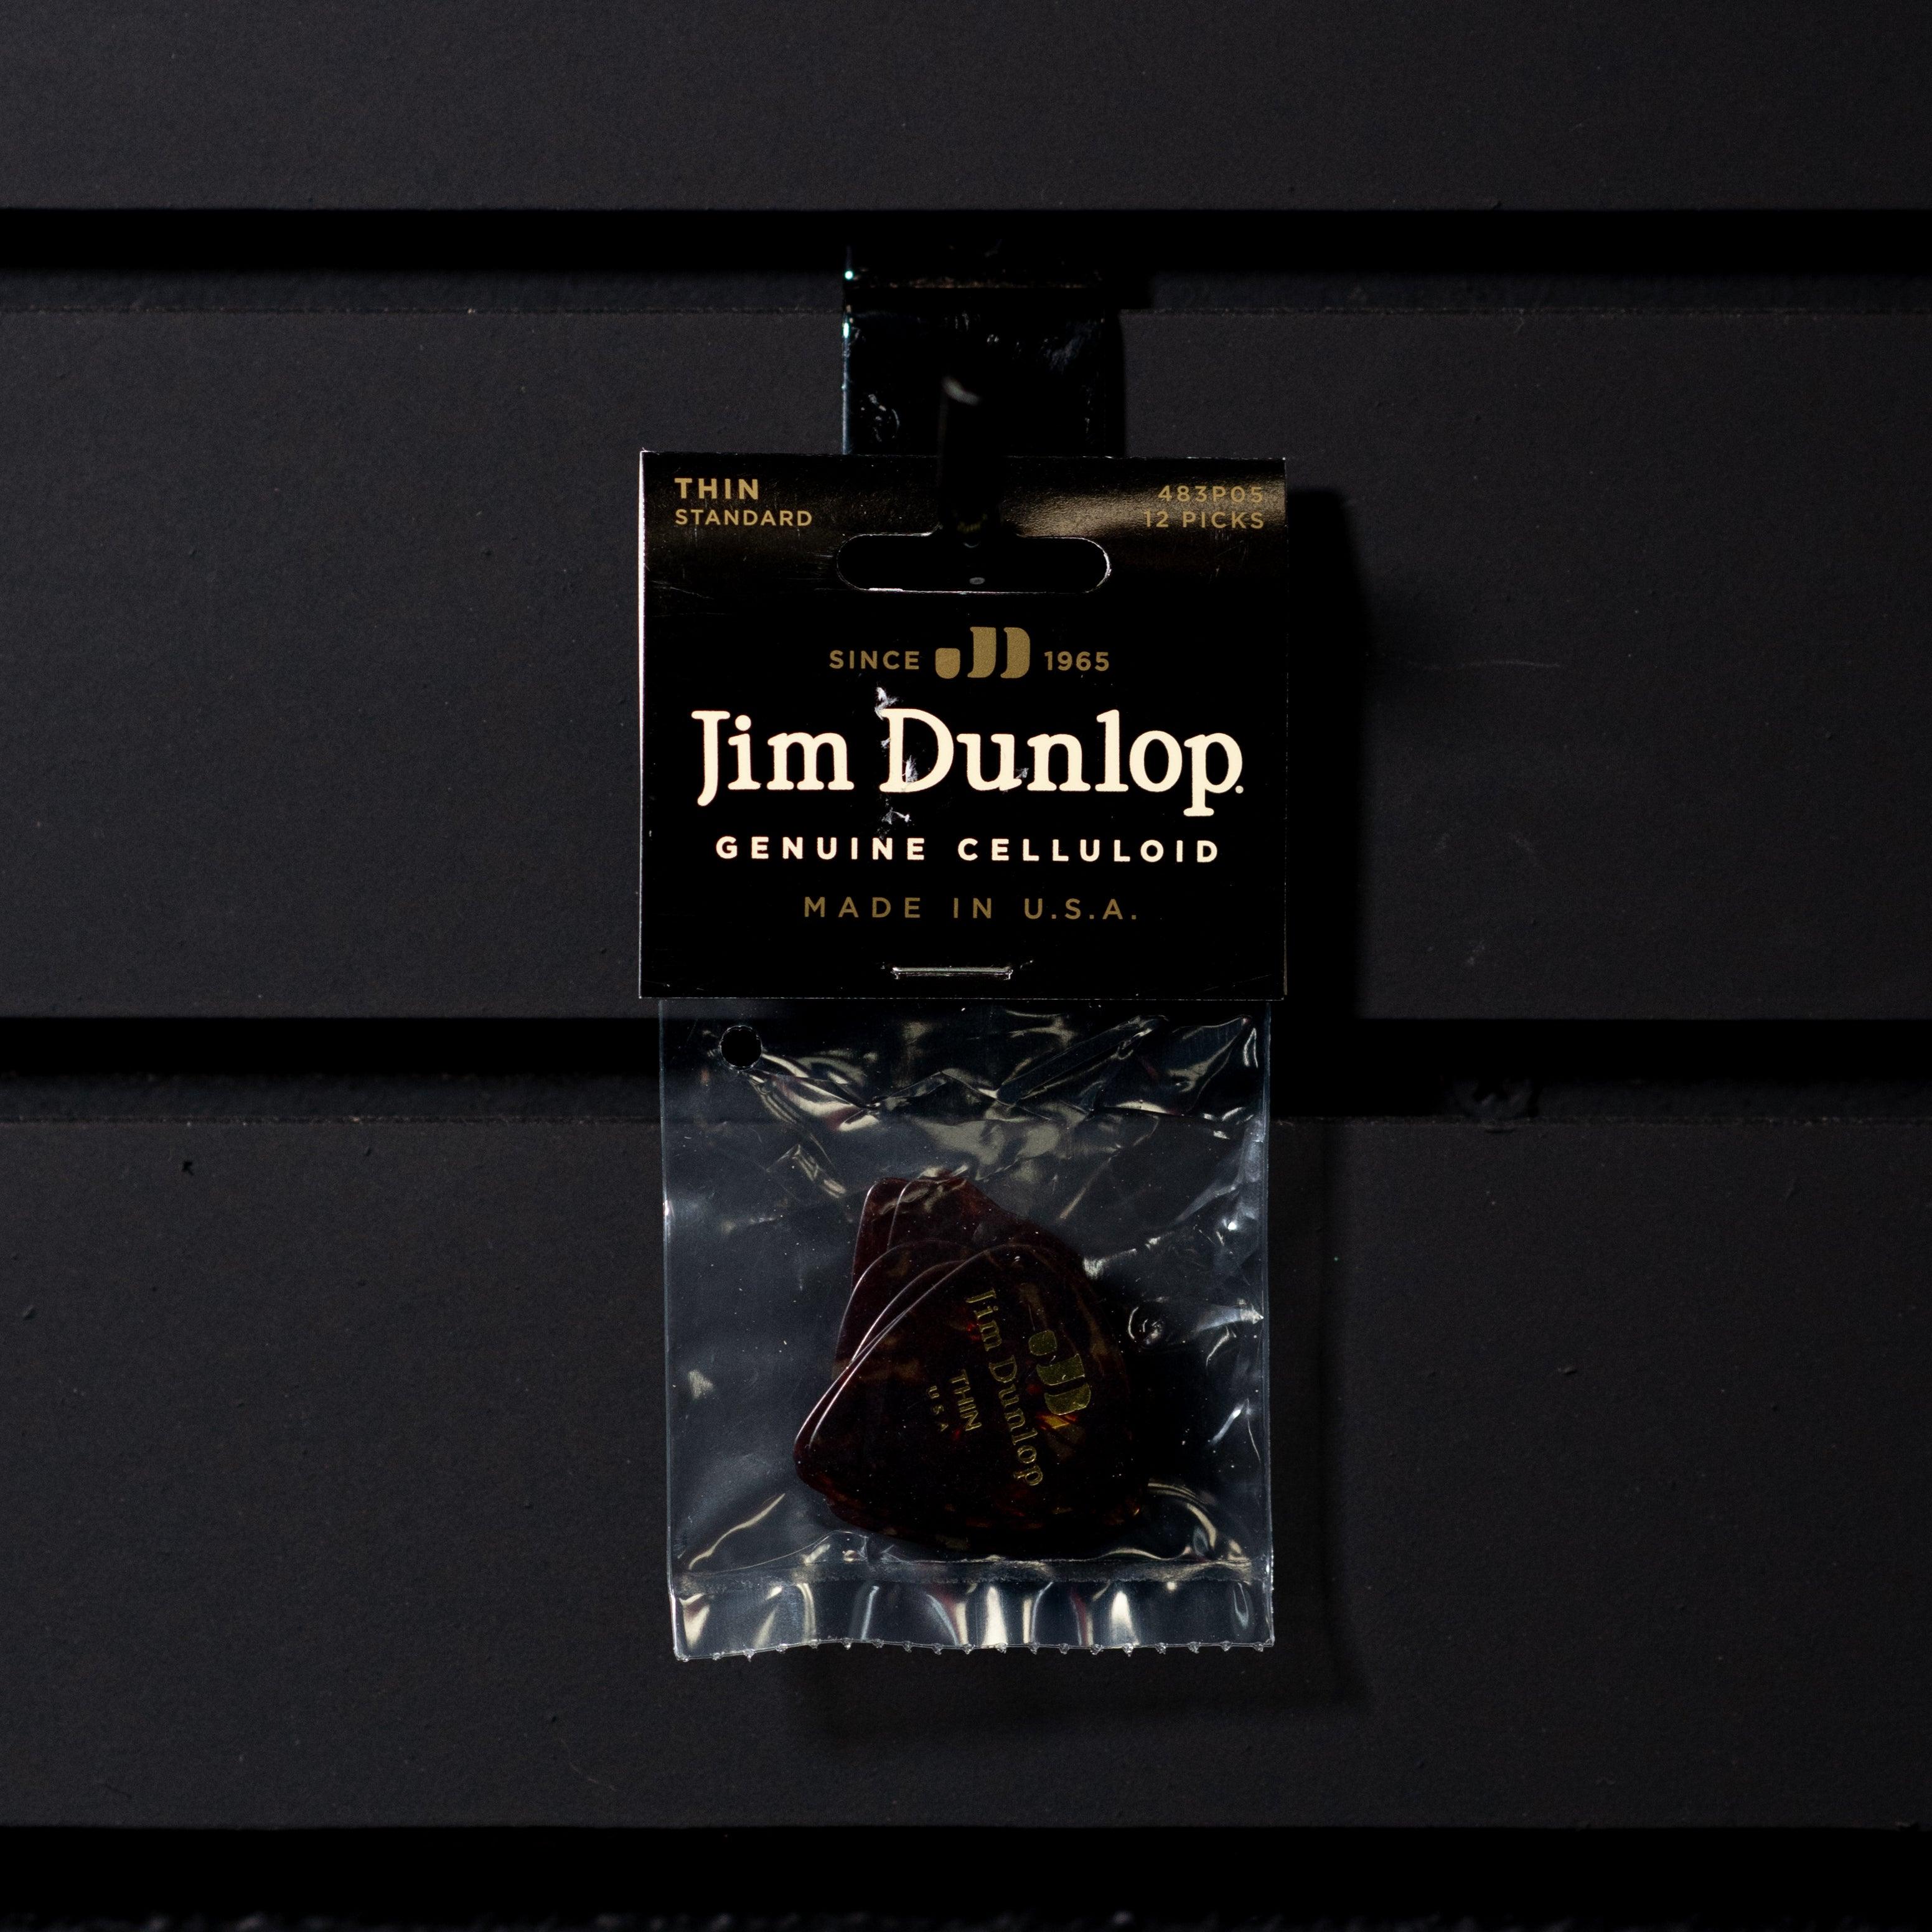 Dunlop Celluloid Thin - Impulse Music Co.